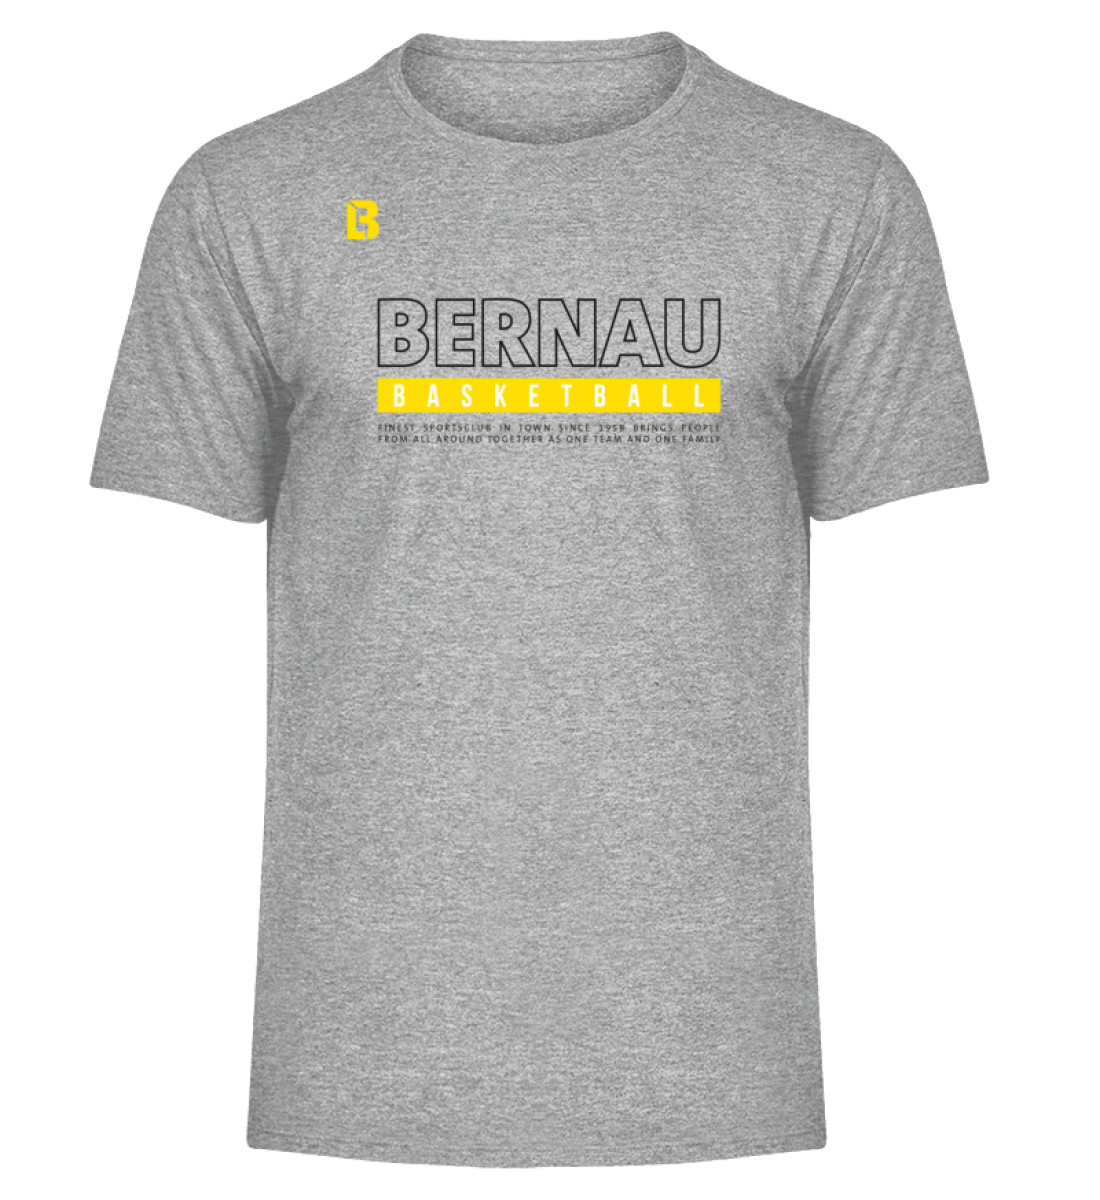 Bernau Basketball "Team" - Herren Melange Shirt-6807